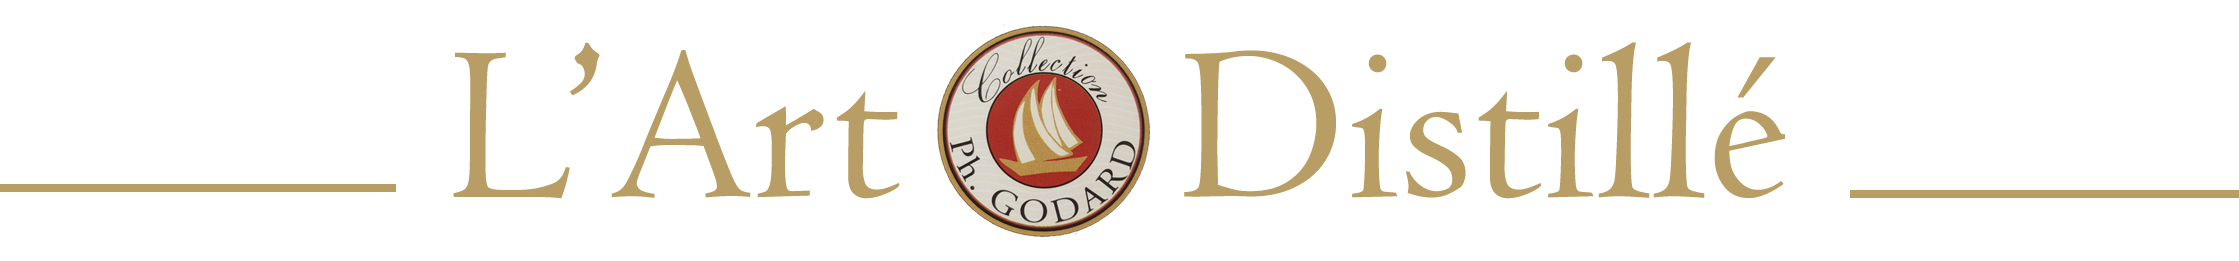 Cognac Godard, Art distillé